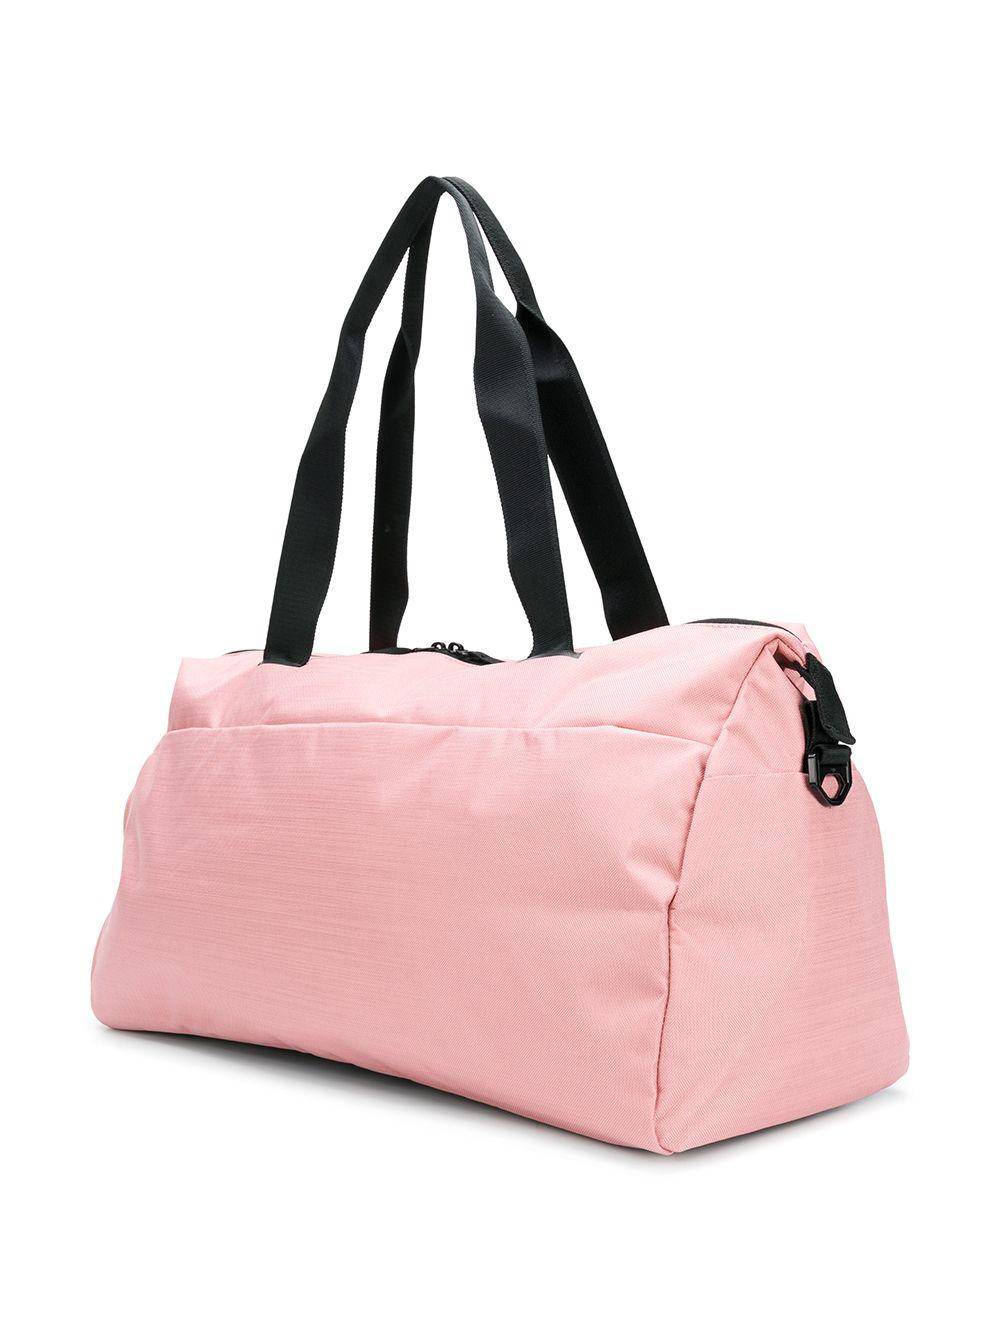 Nike Radiate Club Training Bag in Pink | Lyst